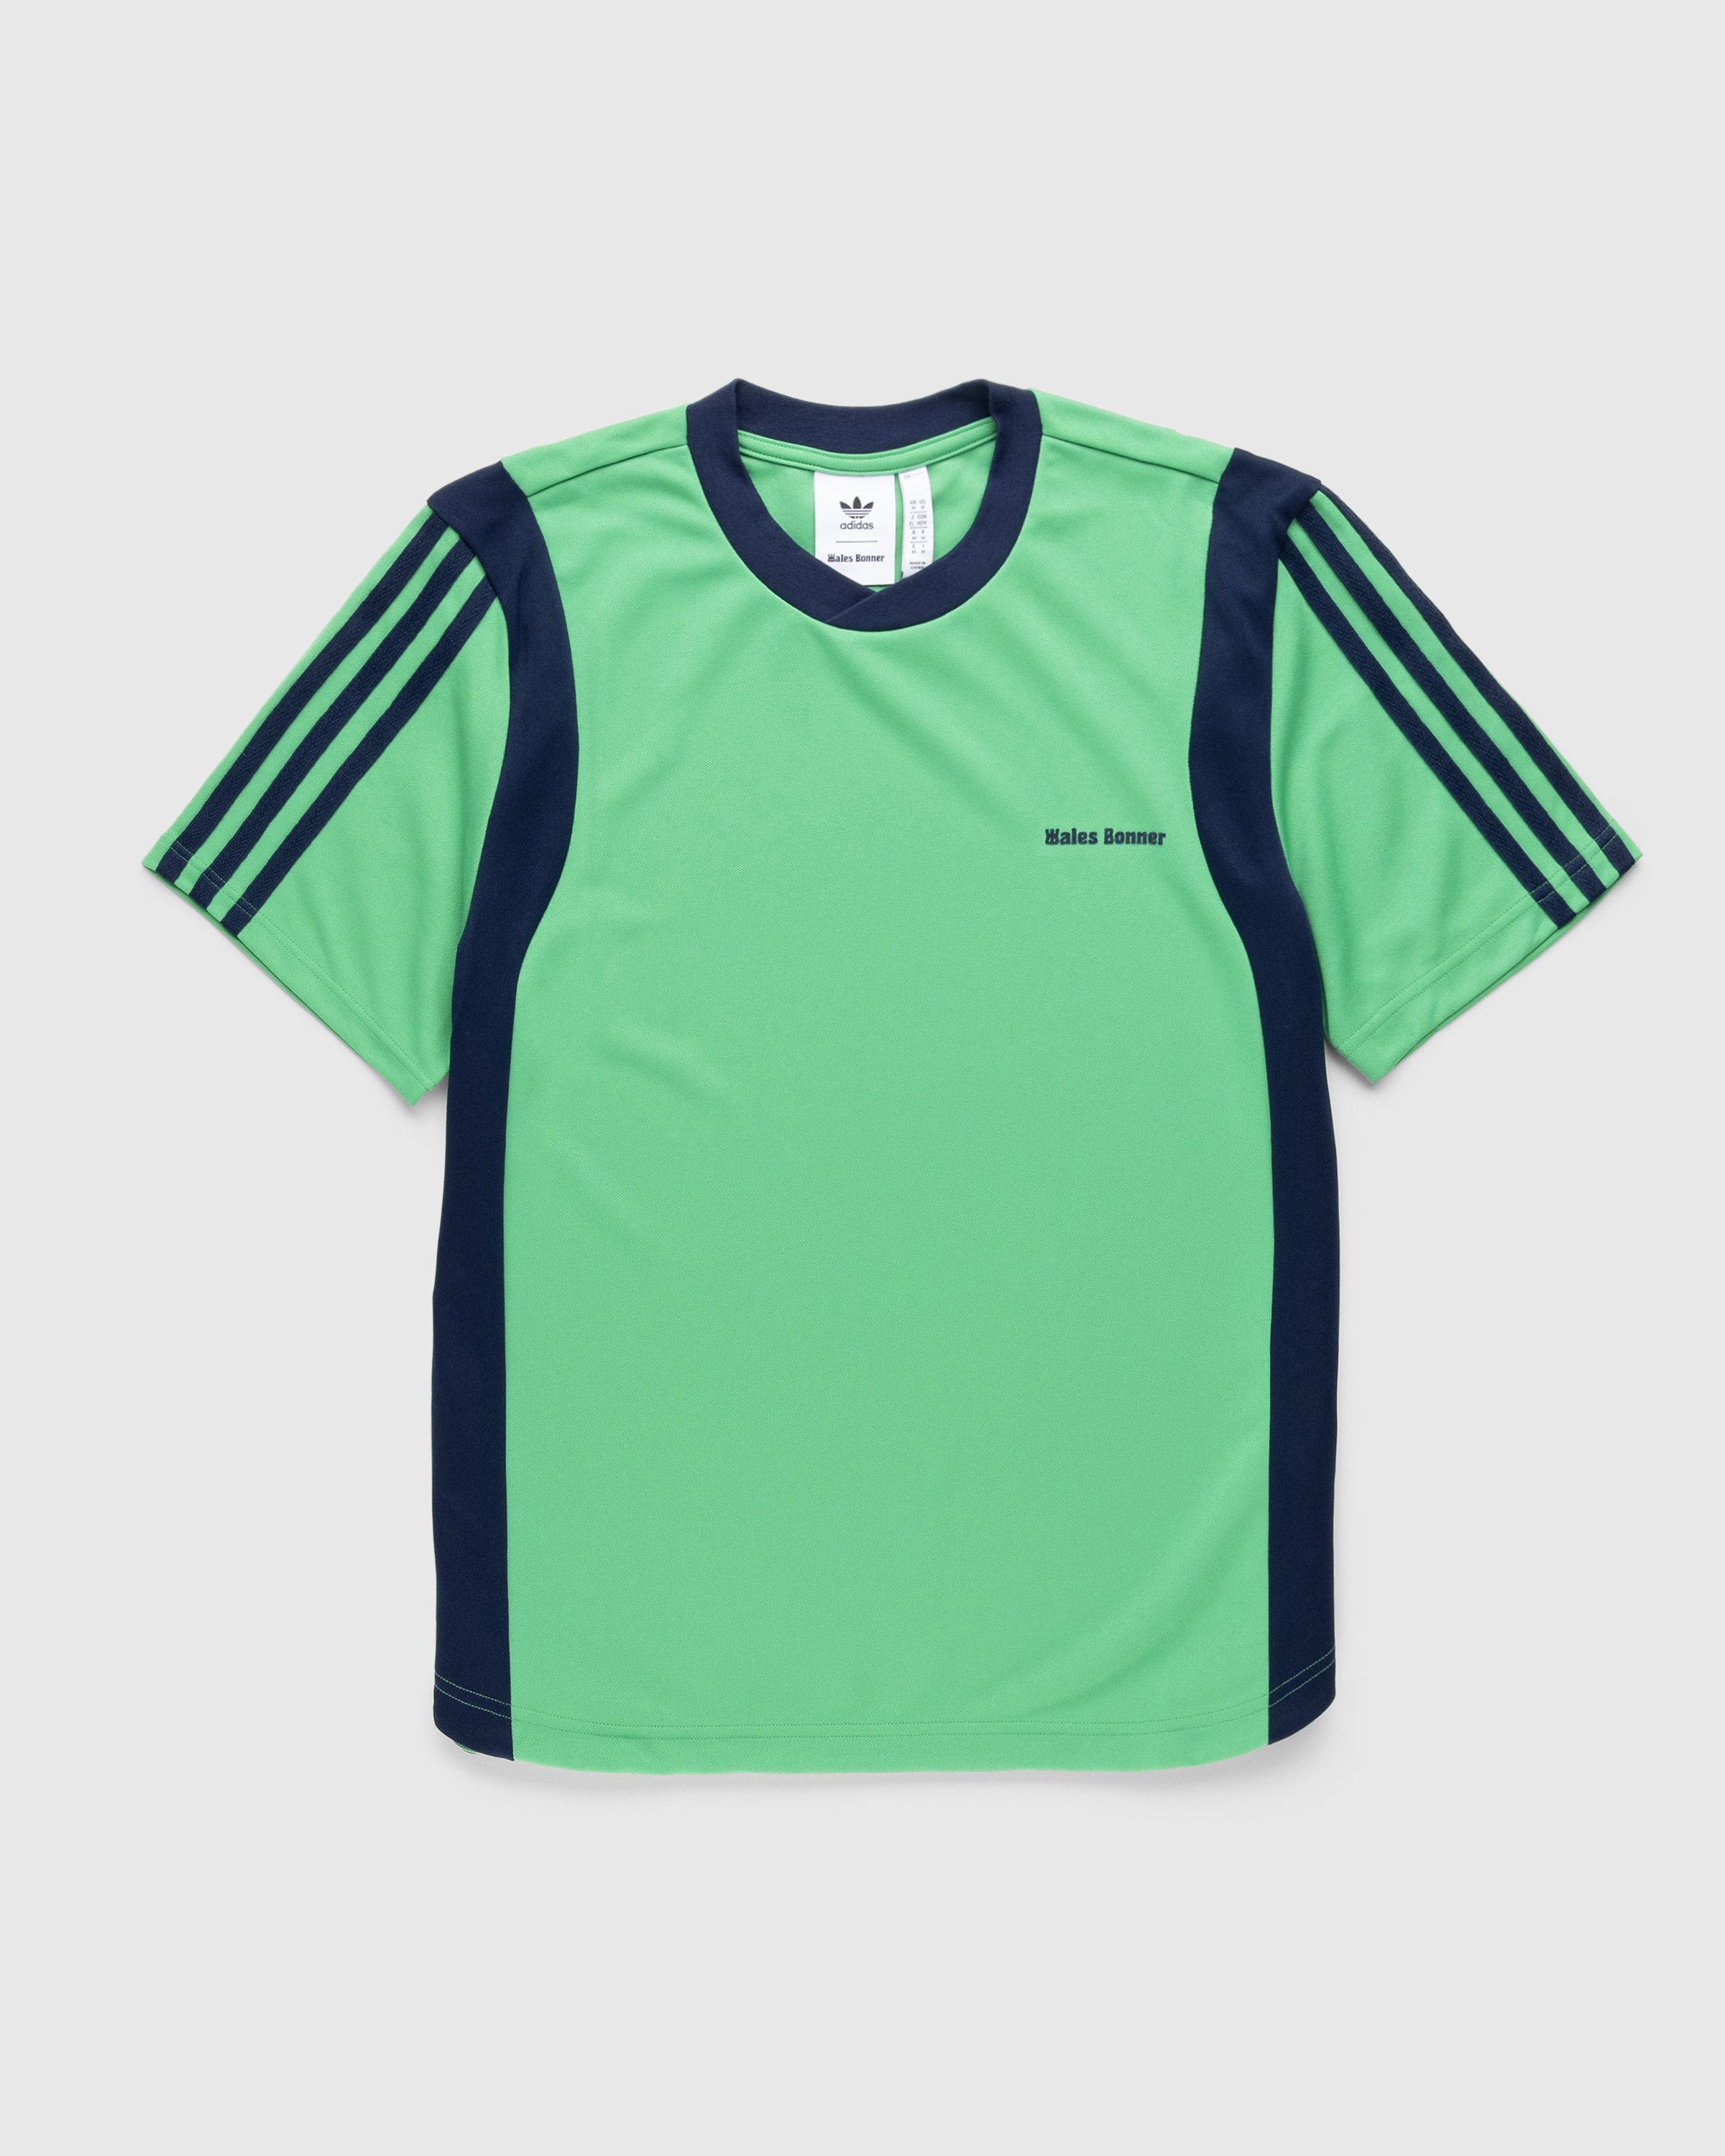 Adidas x Wales Bonner - WB FTBL SHIRT VIVGRN - Clothing - Green - Image 1